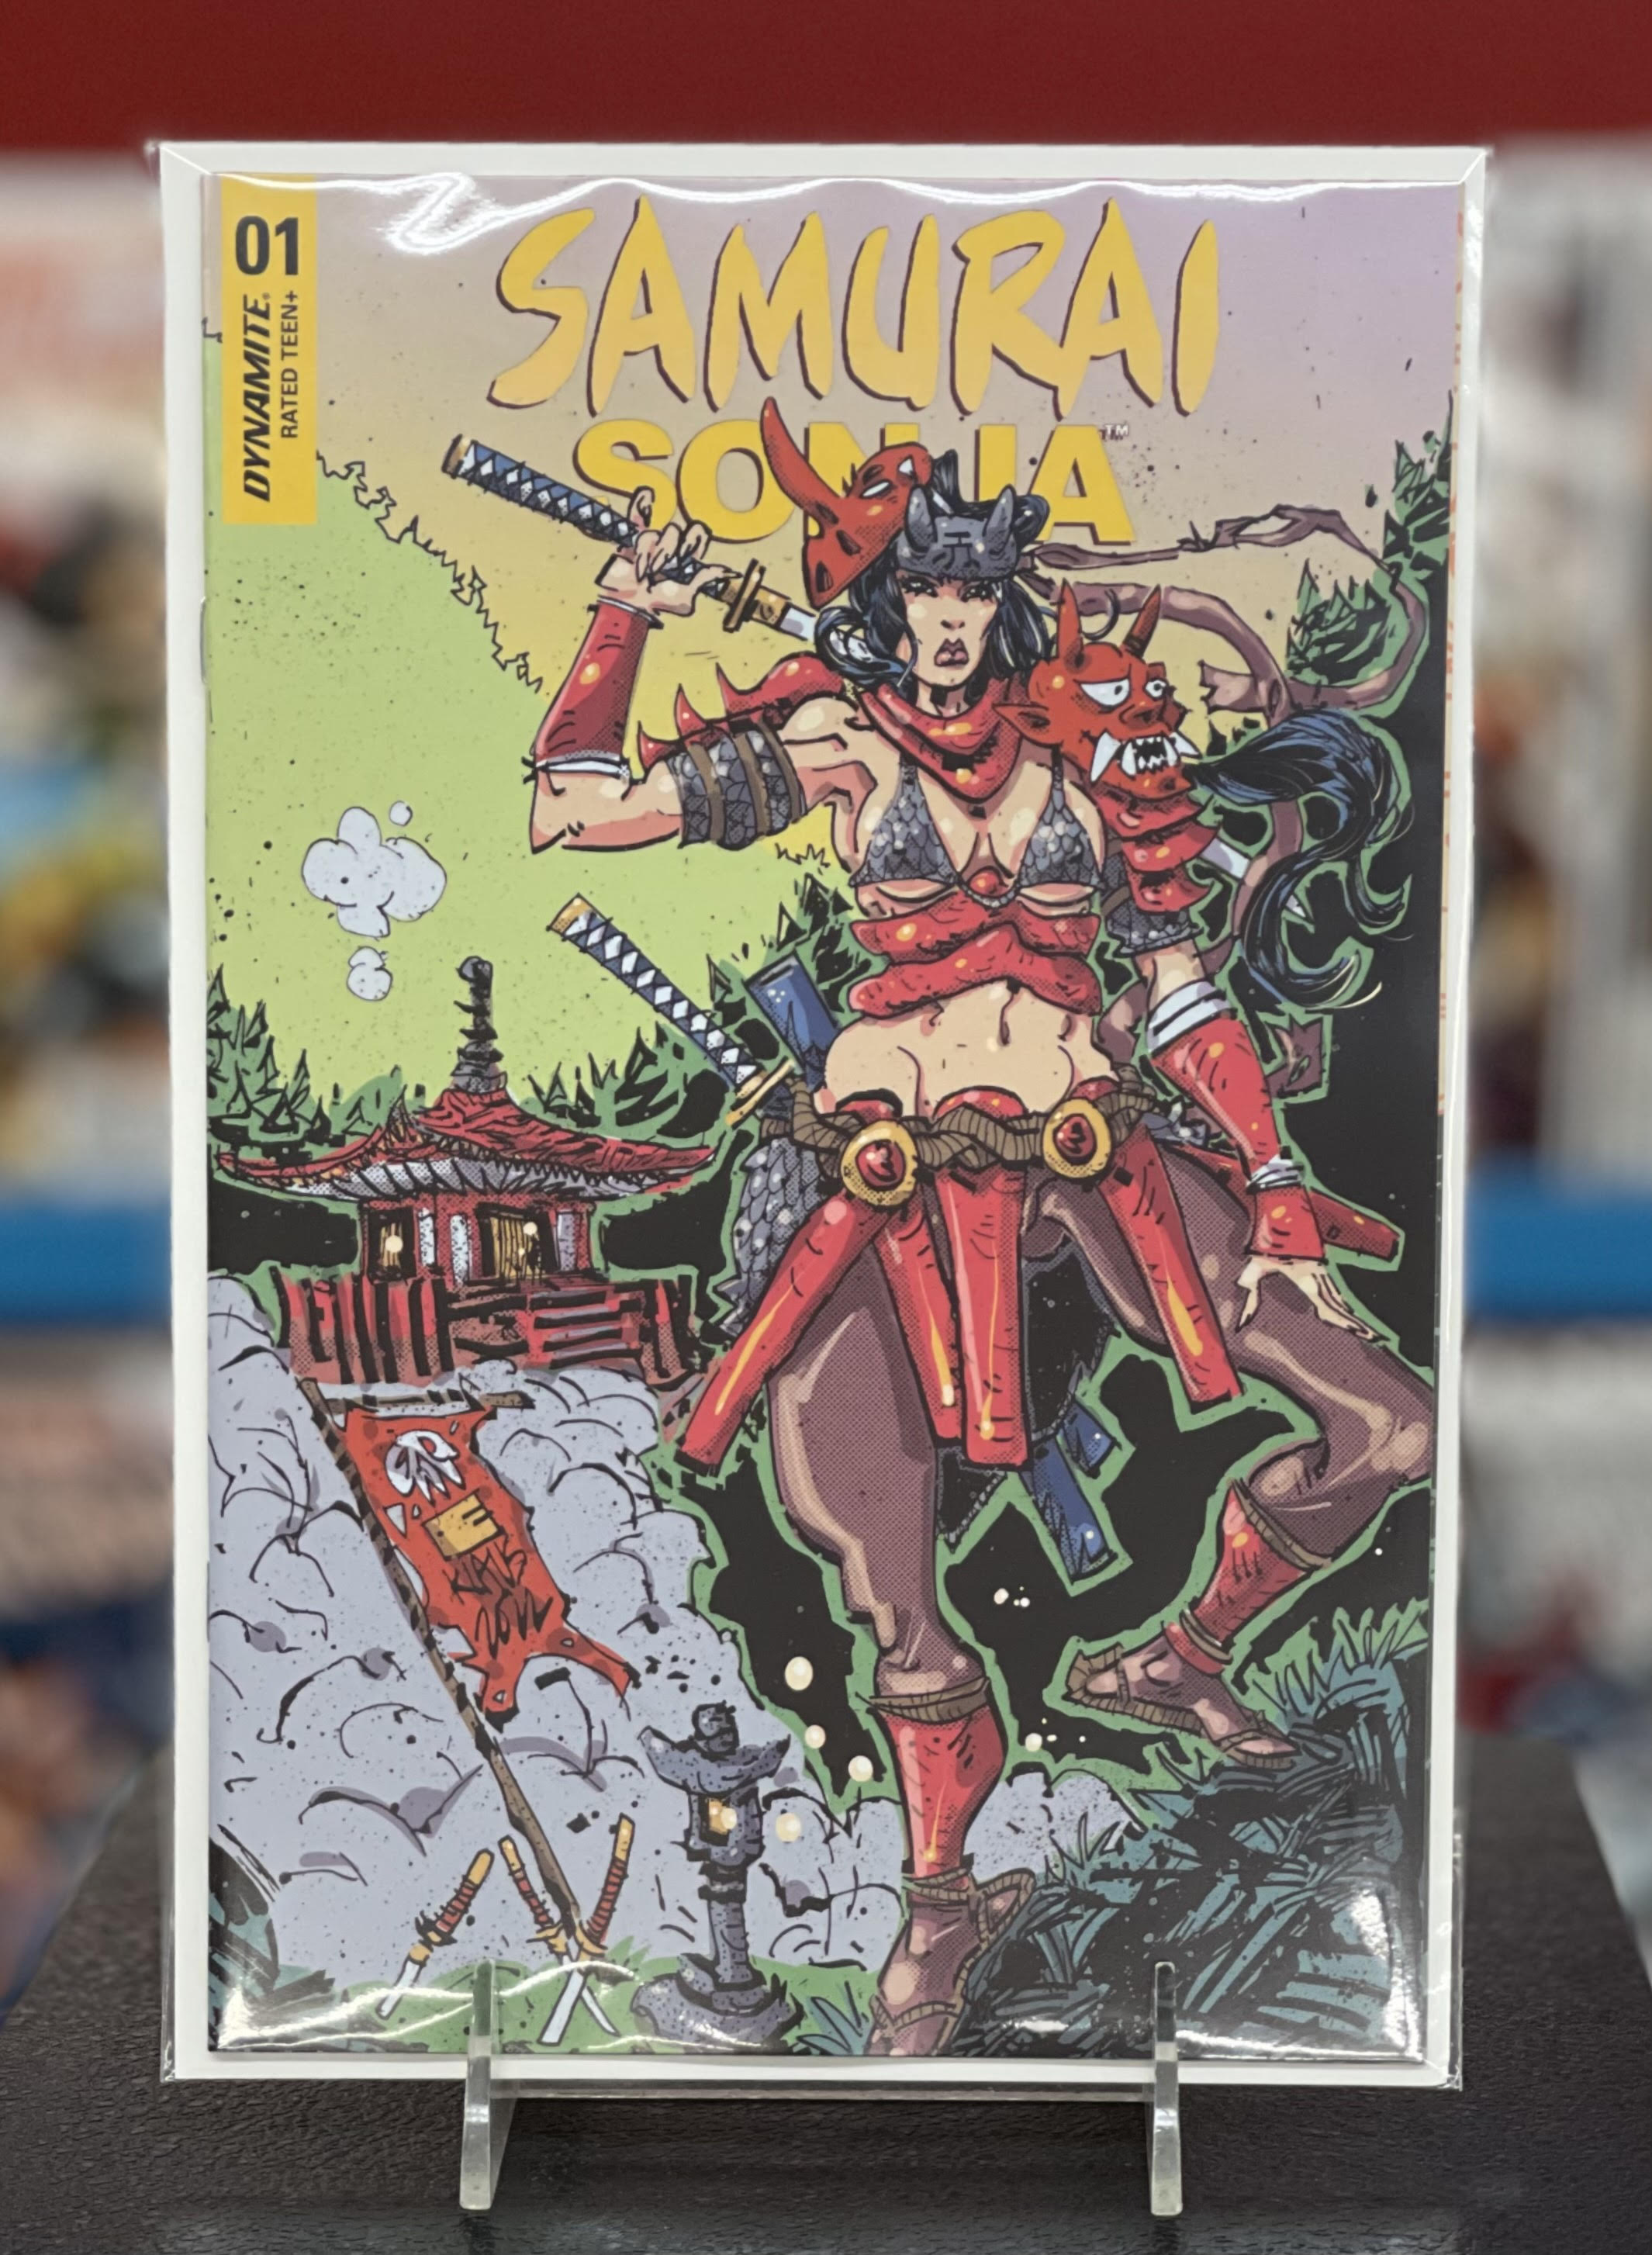 Samurai Sonja #1 Dragon's Lair Exclusive